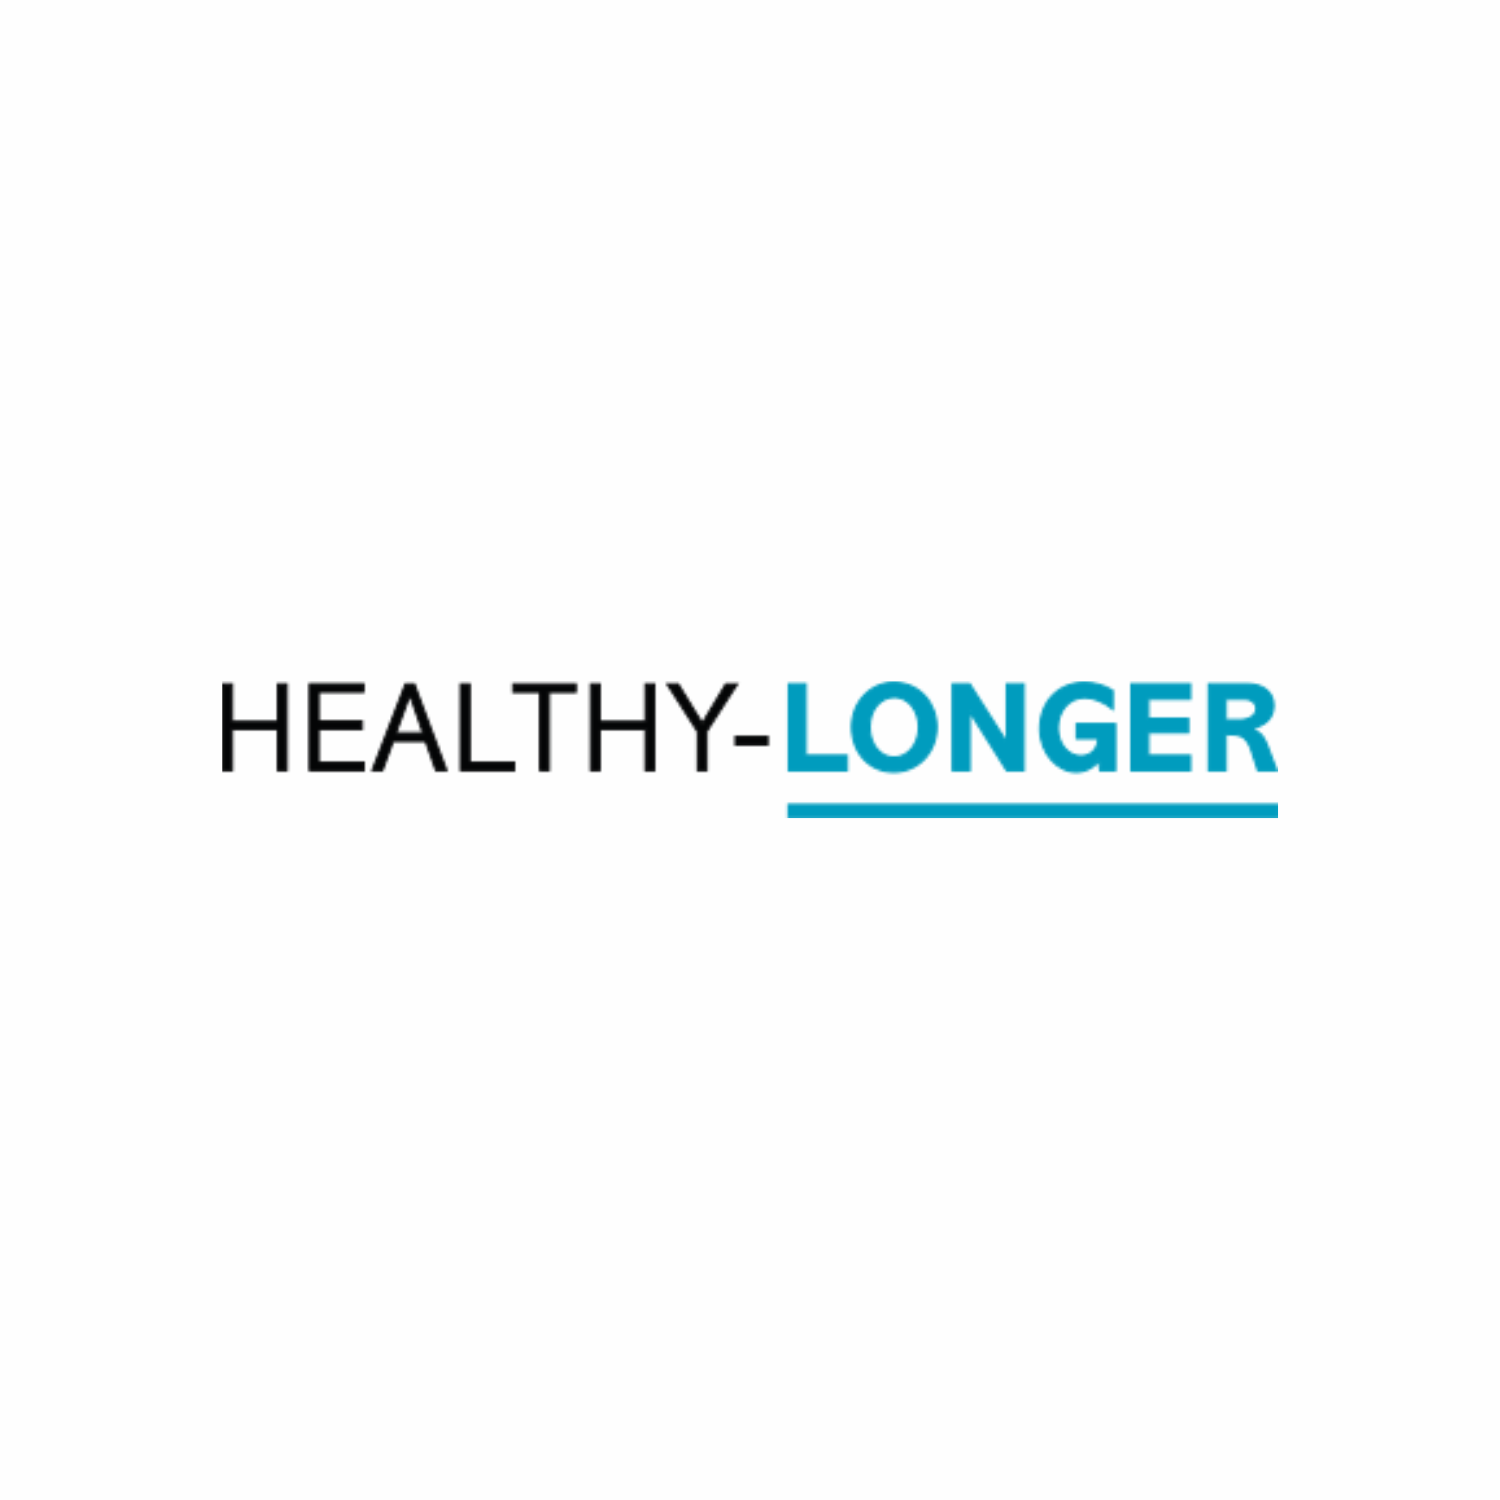 Healthy - Longer